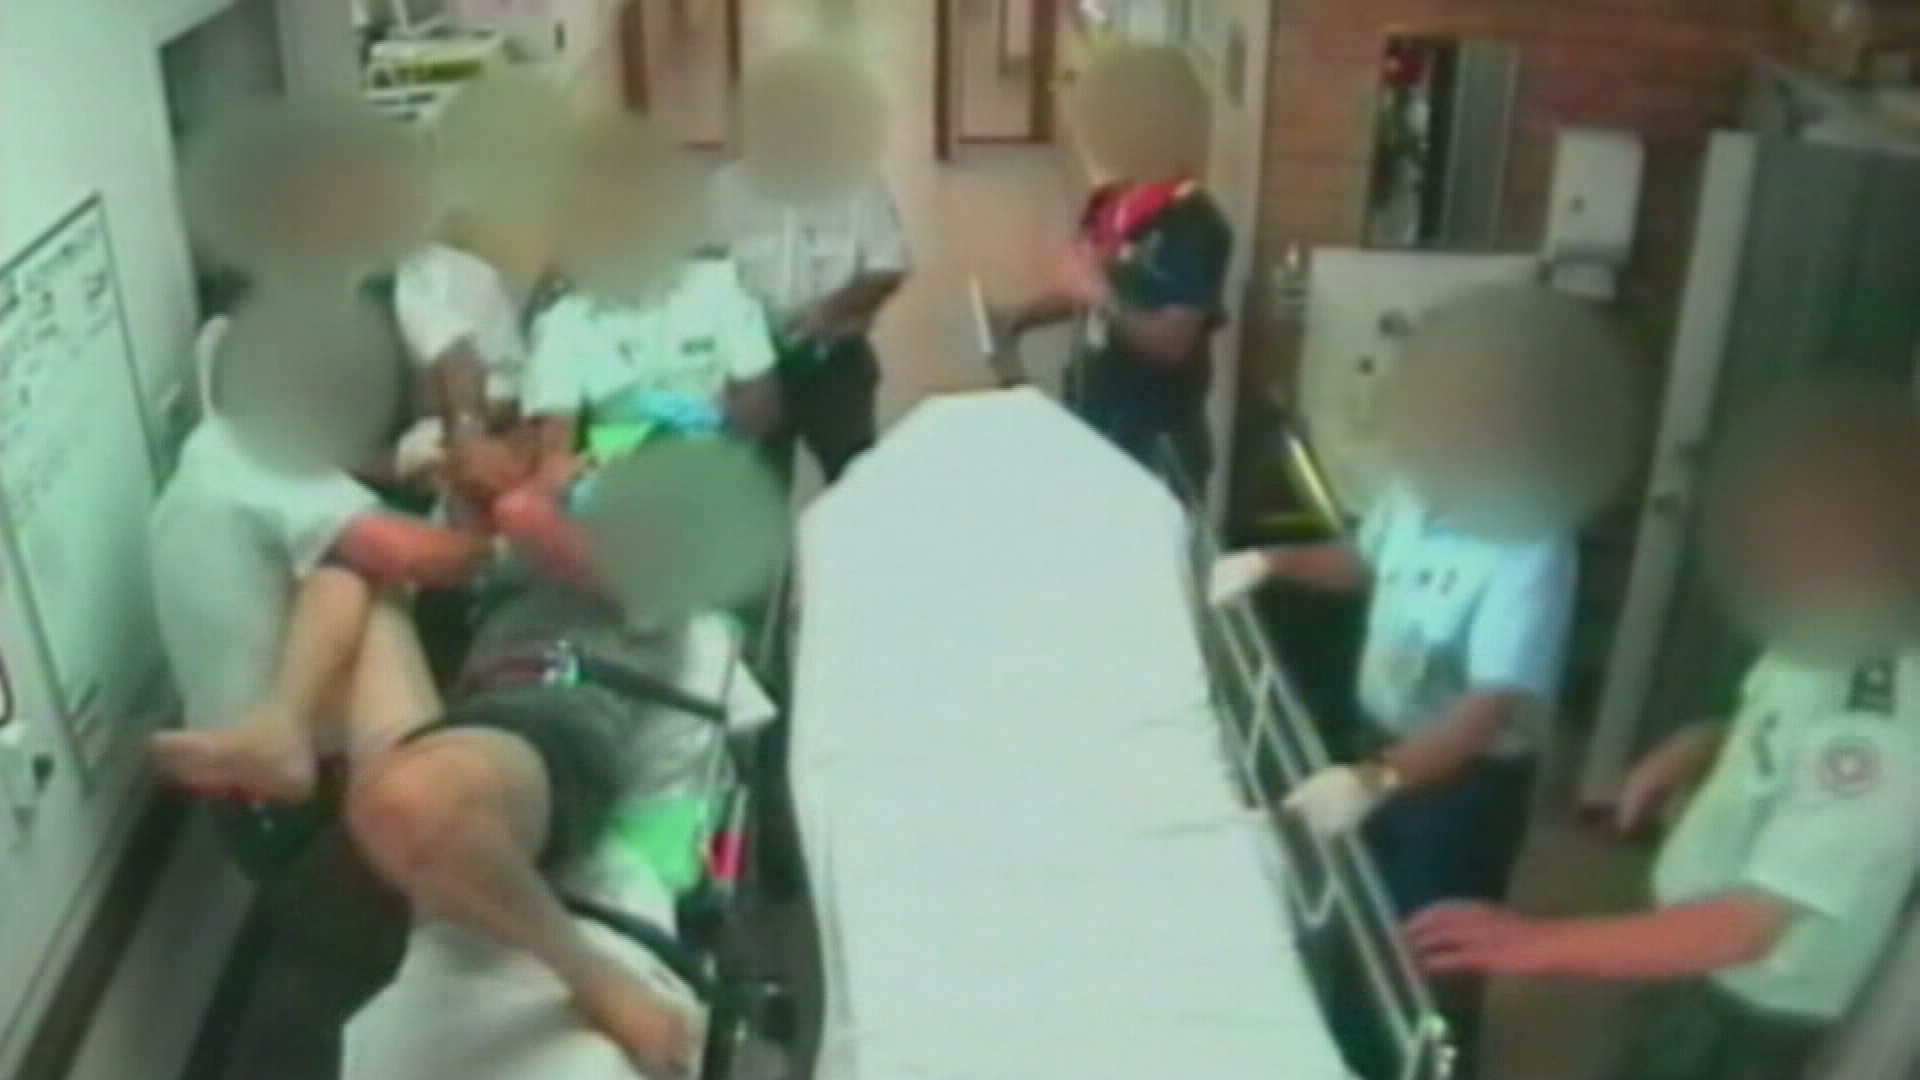 Body-worn cameras to enter NSW hospitals